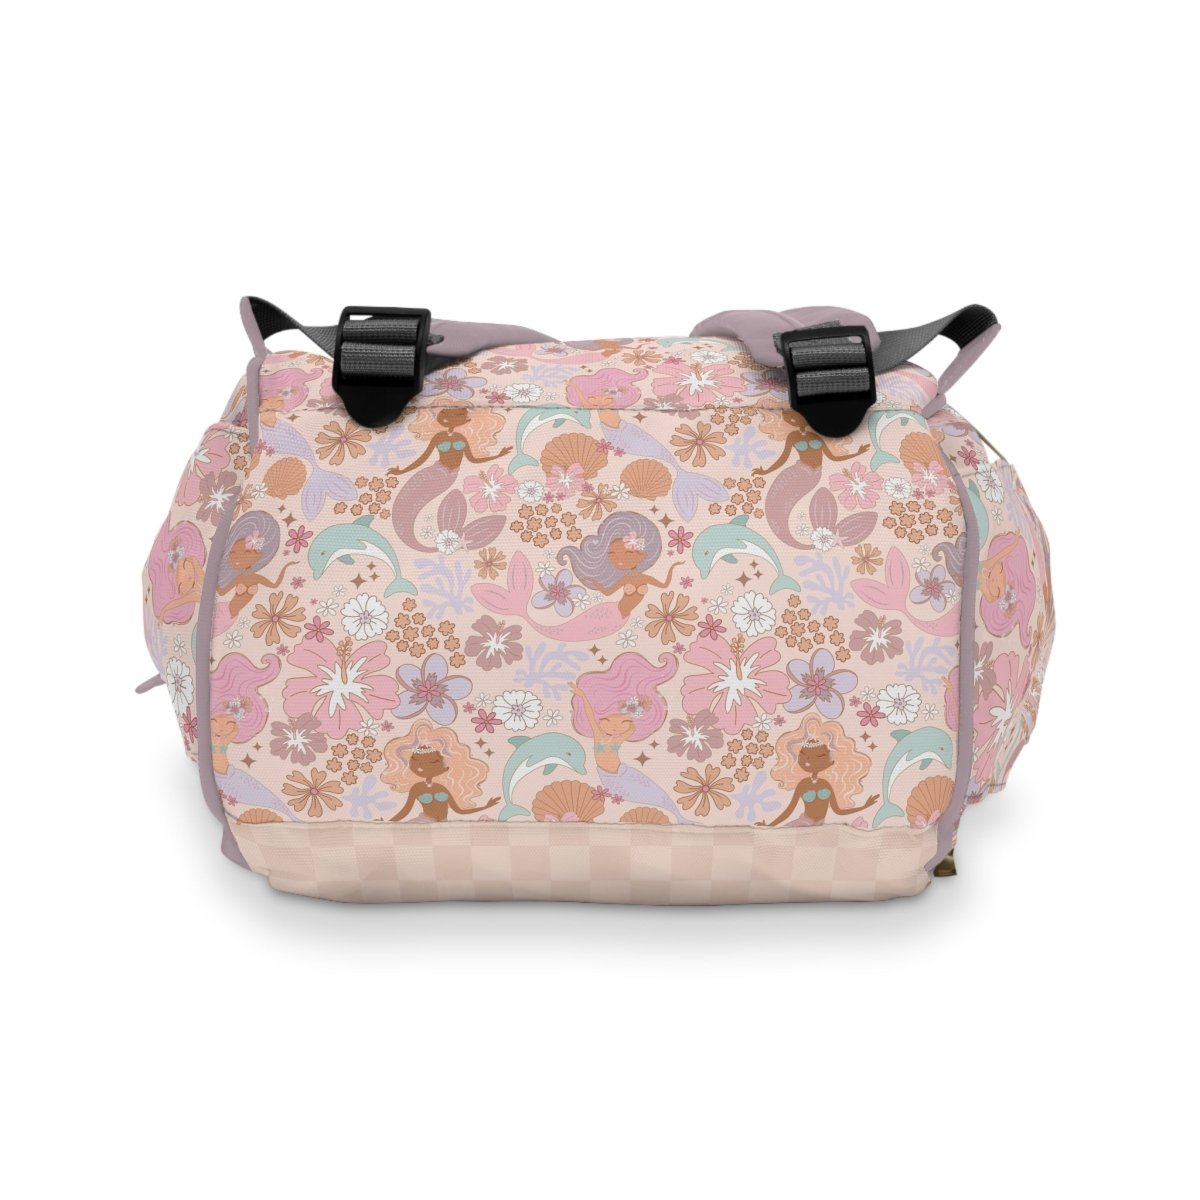 Boho Mermaids Personalized Backpack Diaper Bag - Boho Mermaids, gender_girl, text